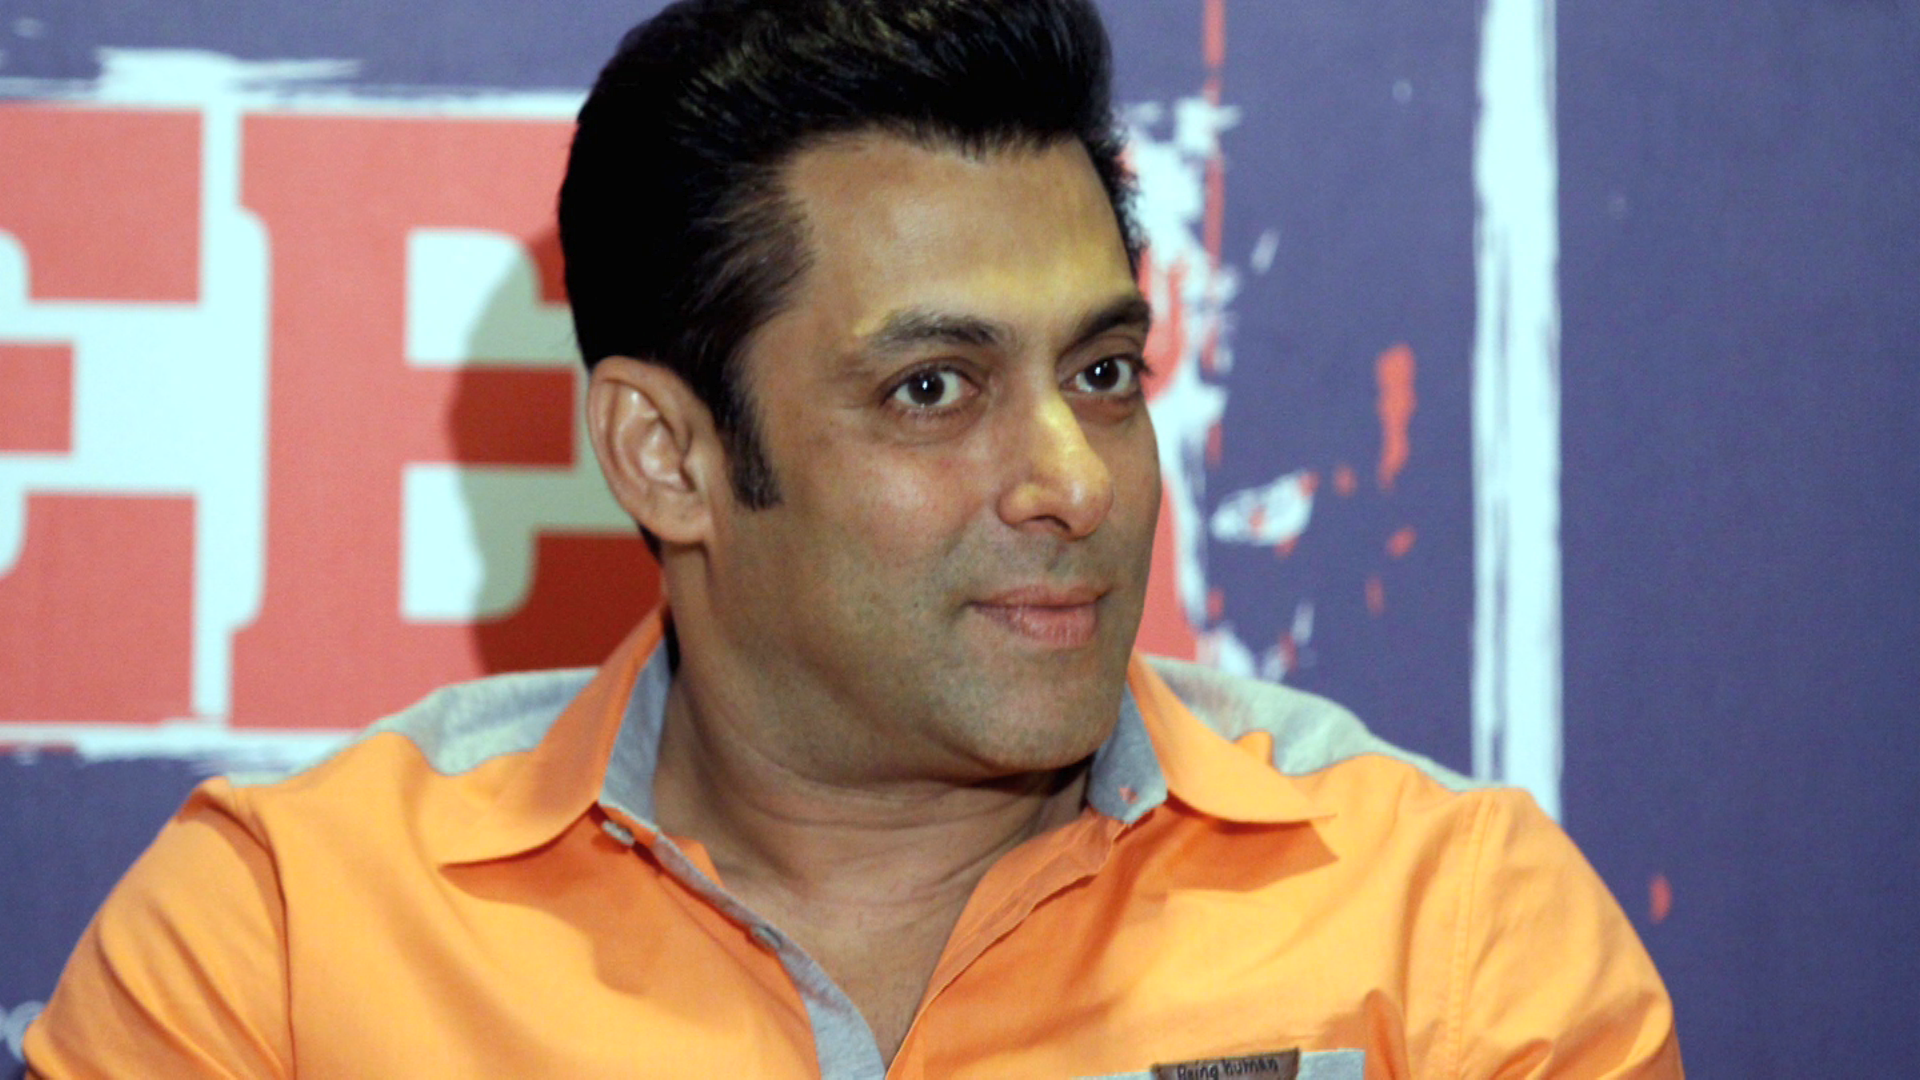 Sex Video Salman Khan - Salman Khan's conviction in fatal hit-and-run tossed | CNN